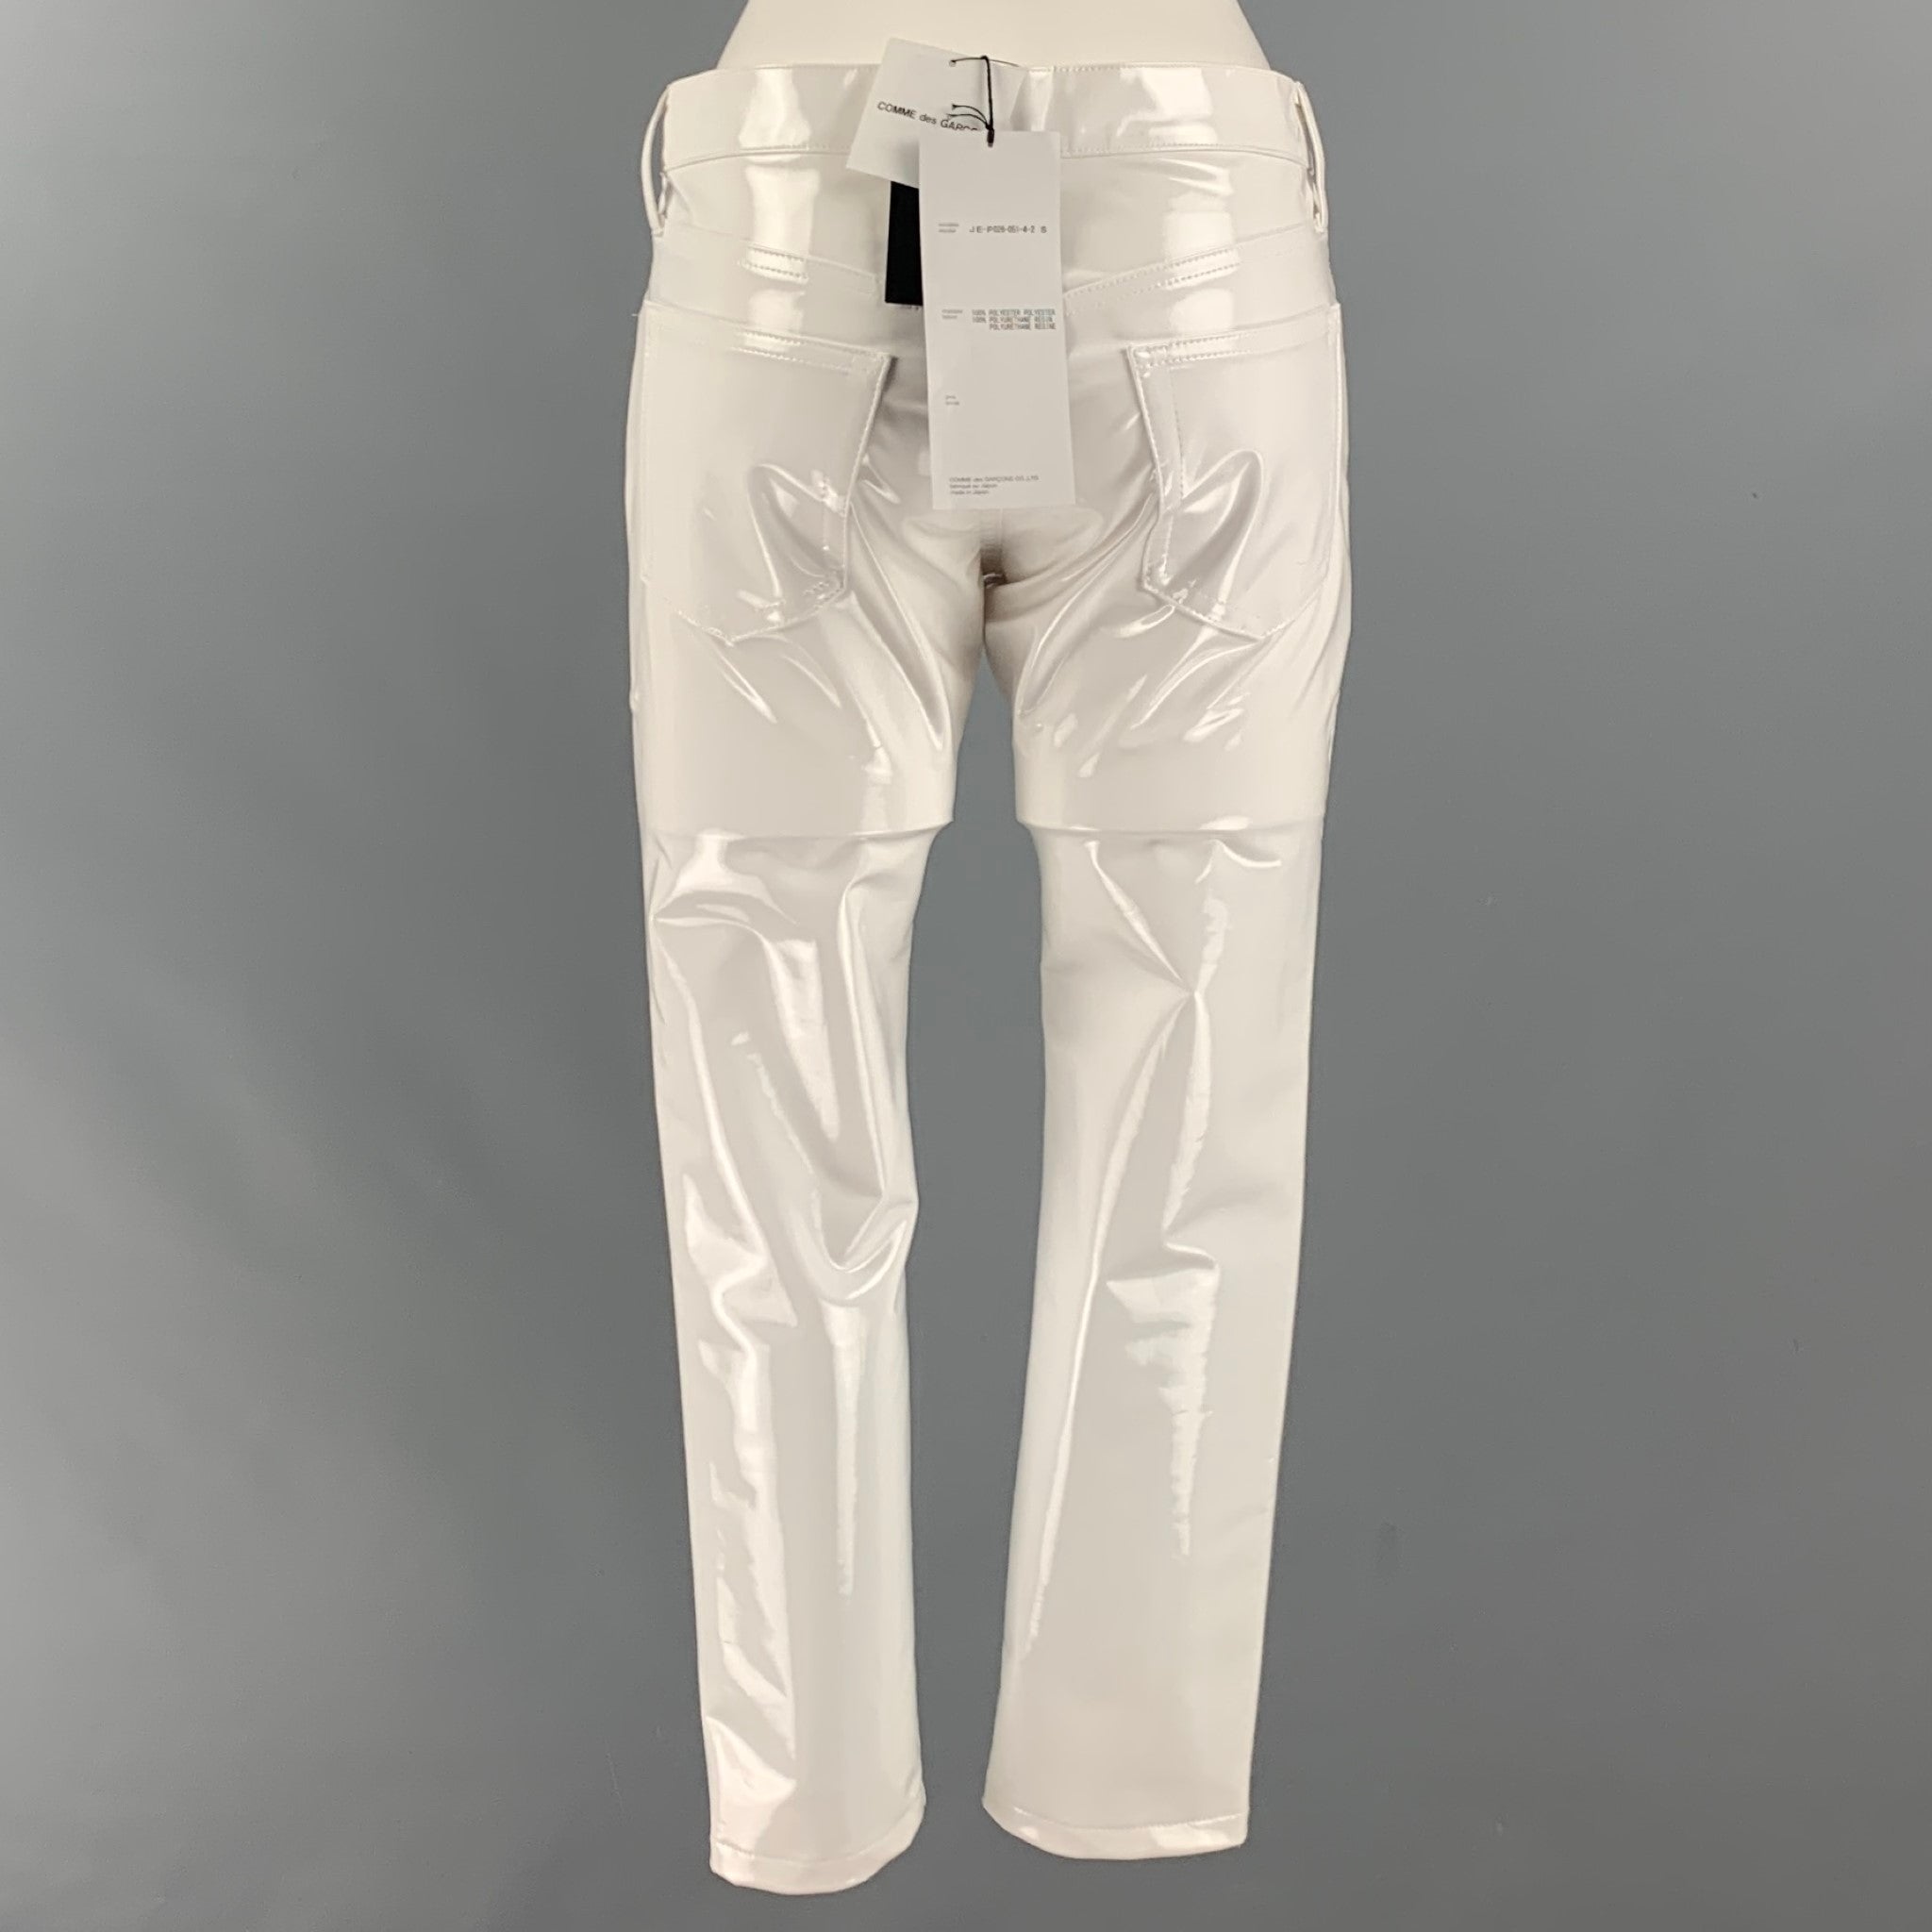 Long Pants For Men Men's Trendy Casual Loose Large Size Cargo Pants  Sweatpants Long Pants White M JE - Walmart.ca